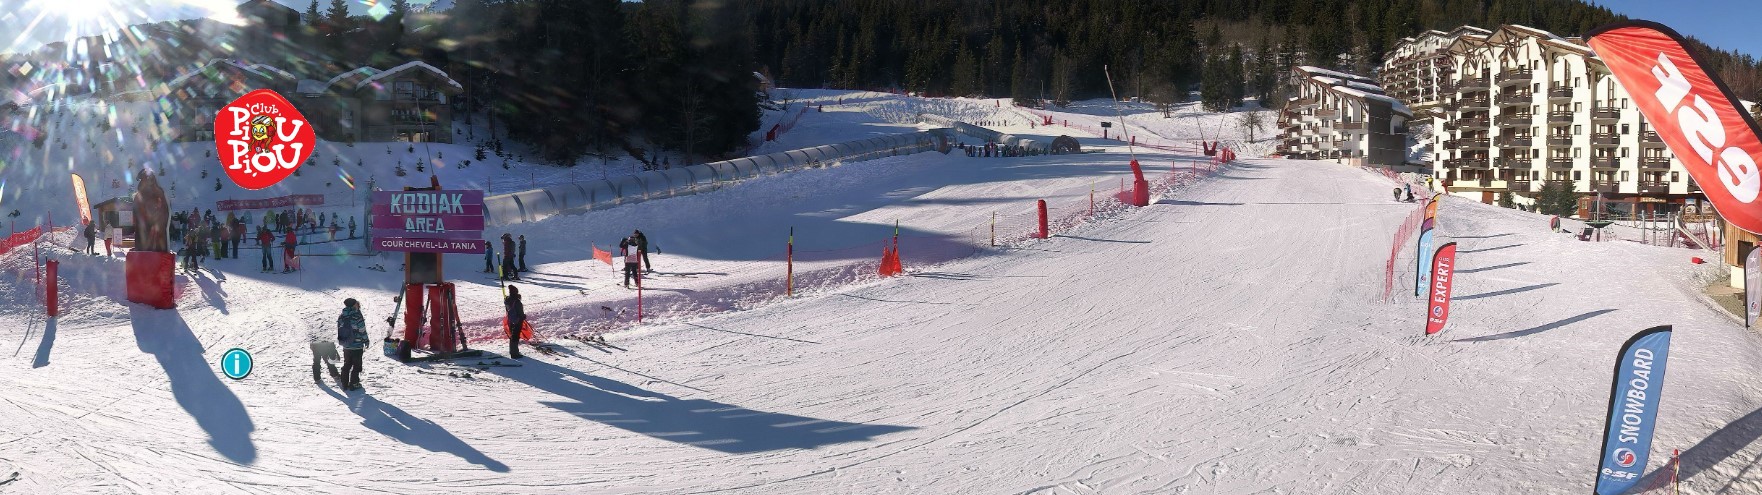 Cours De Ski, Courchevel ski club